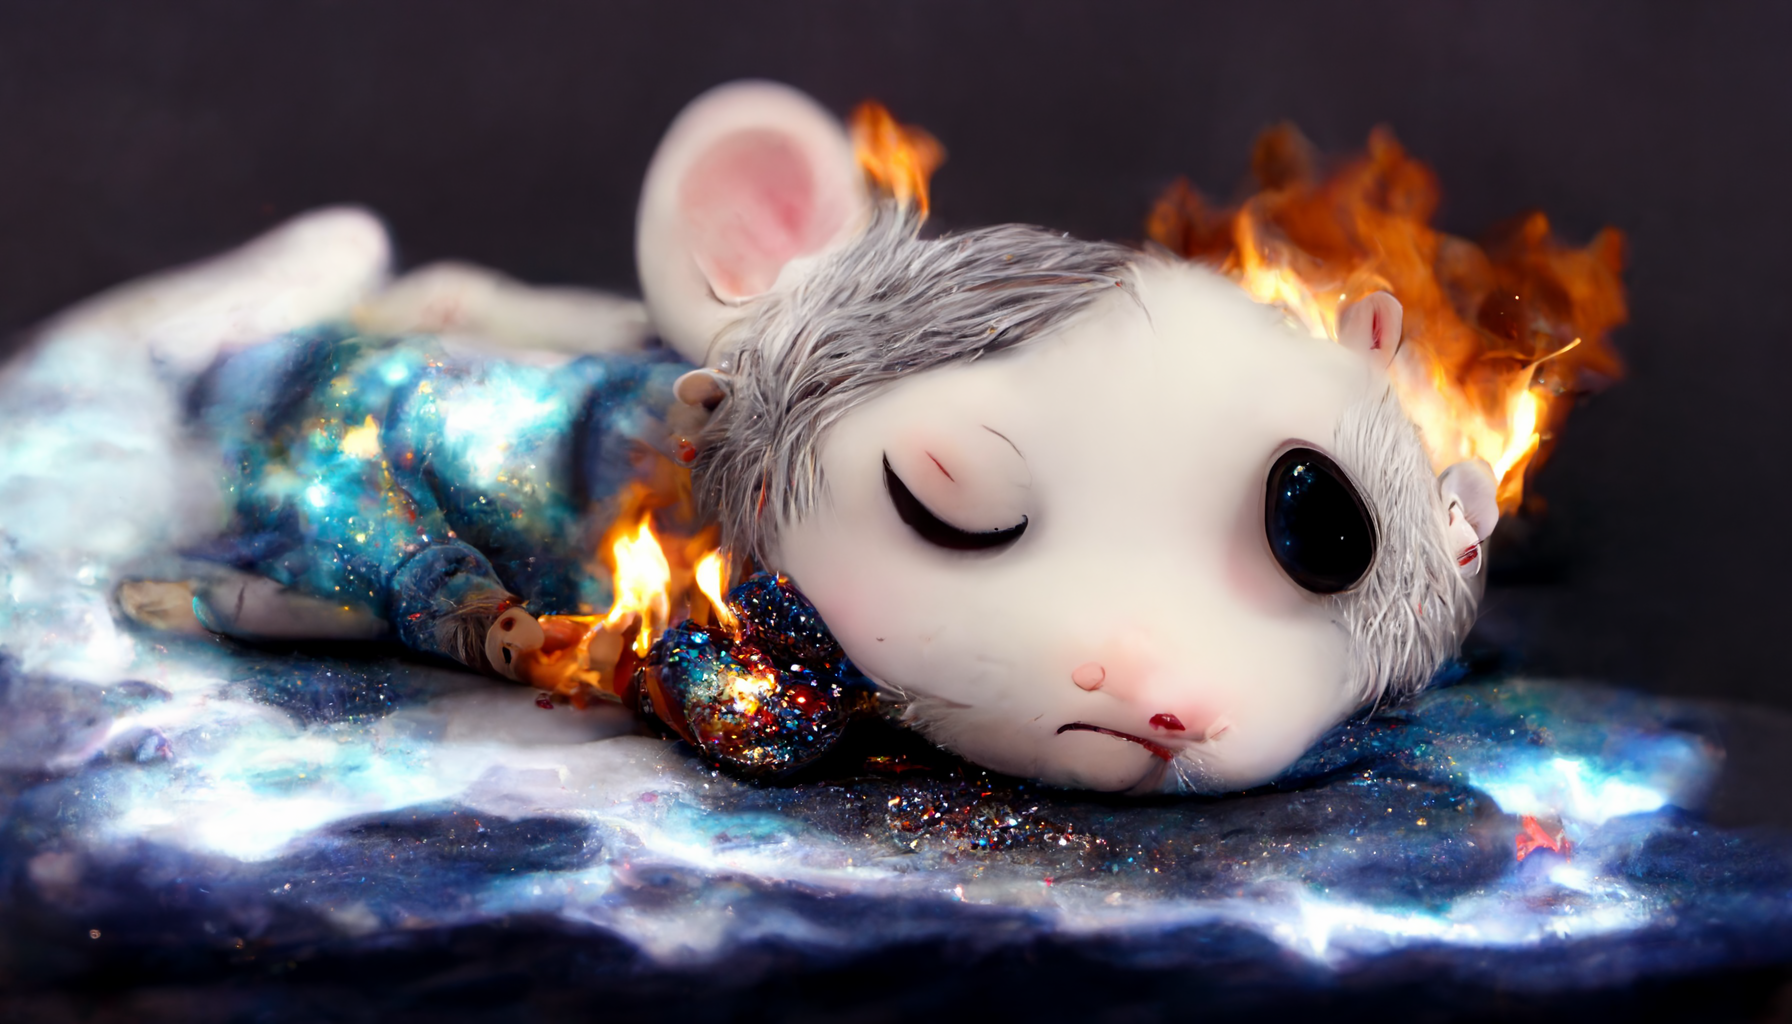 Singer Boy the rat on fire